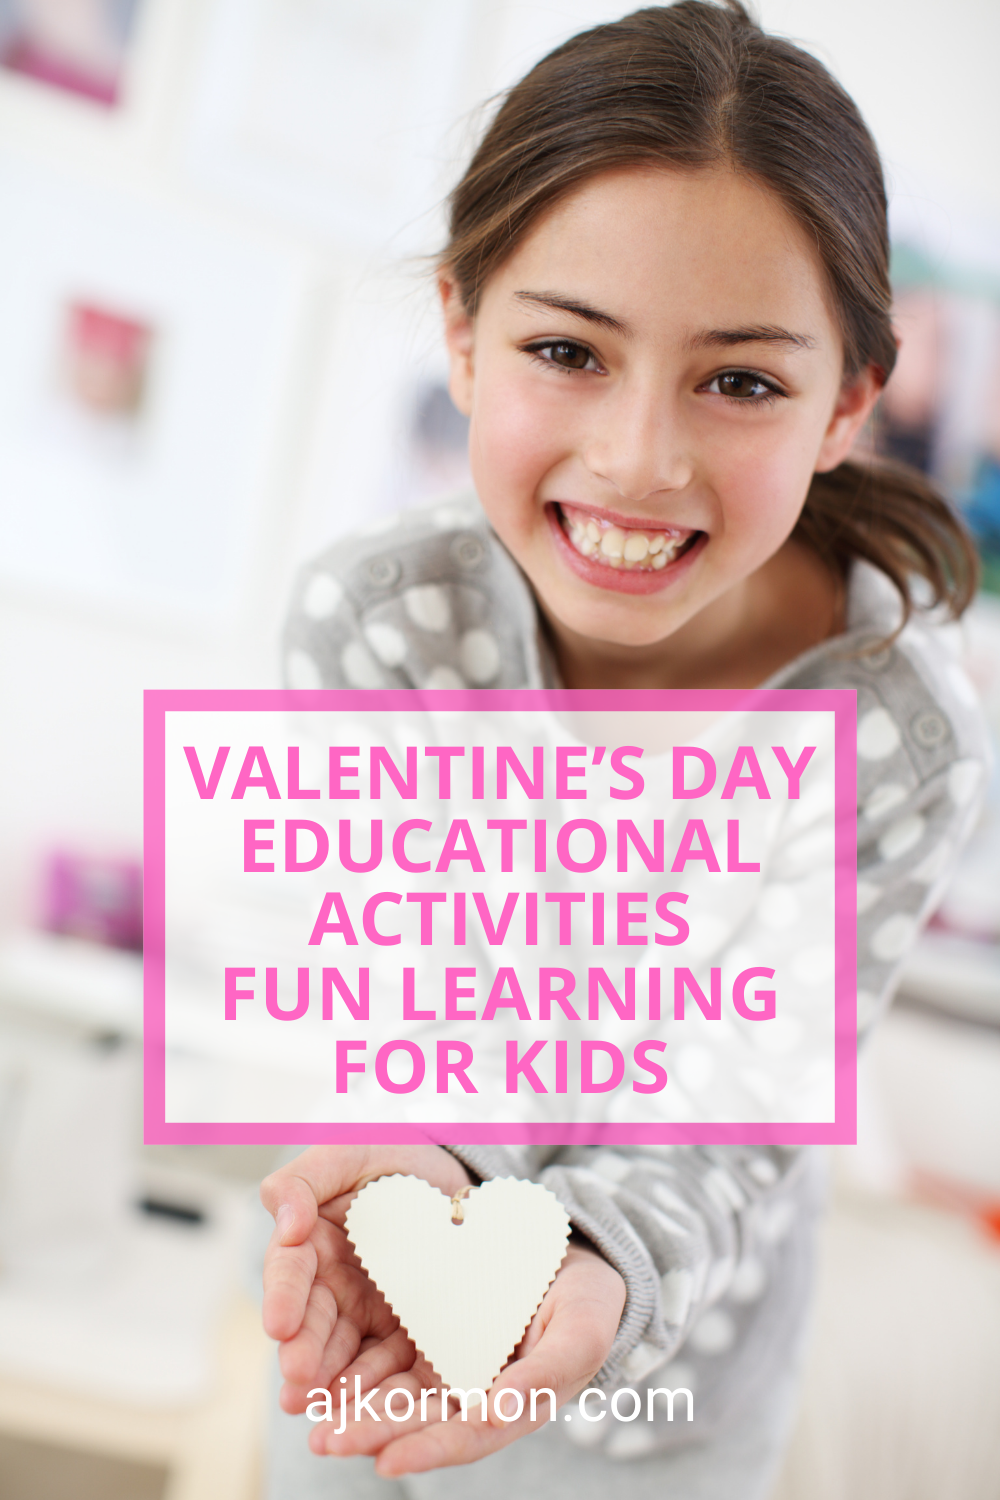 Fun Valentine's Day Activities for Kids